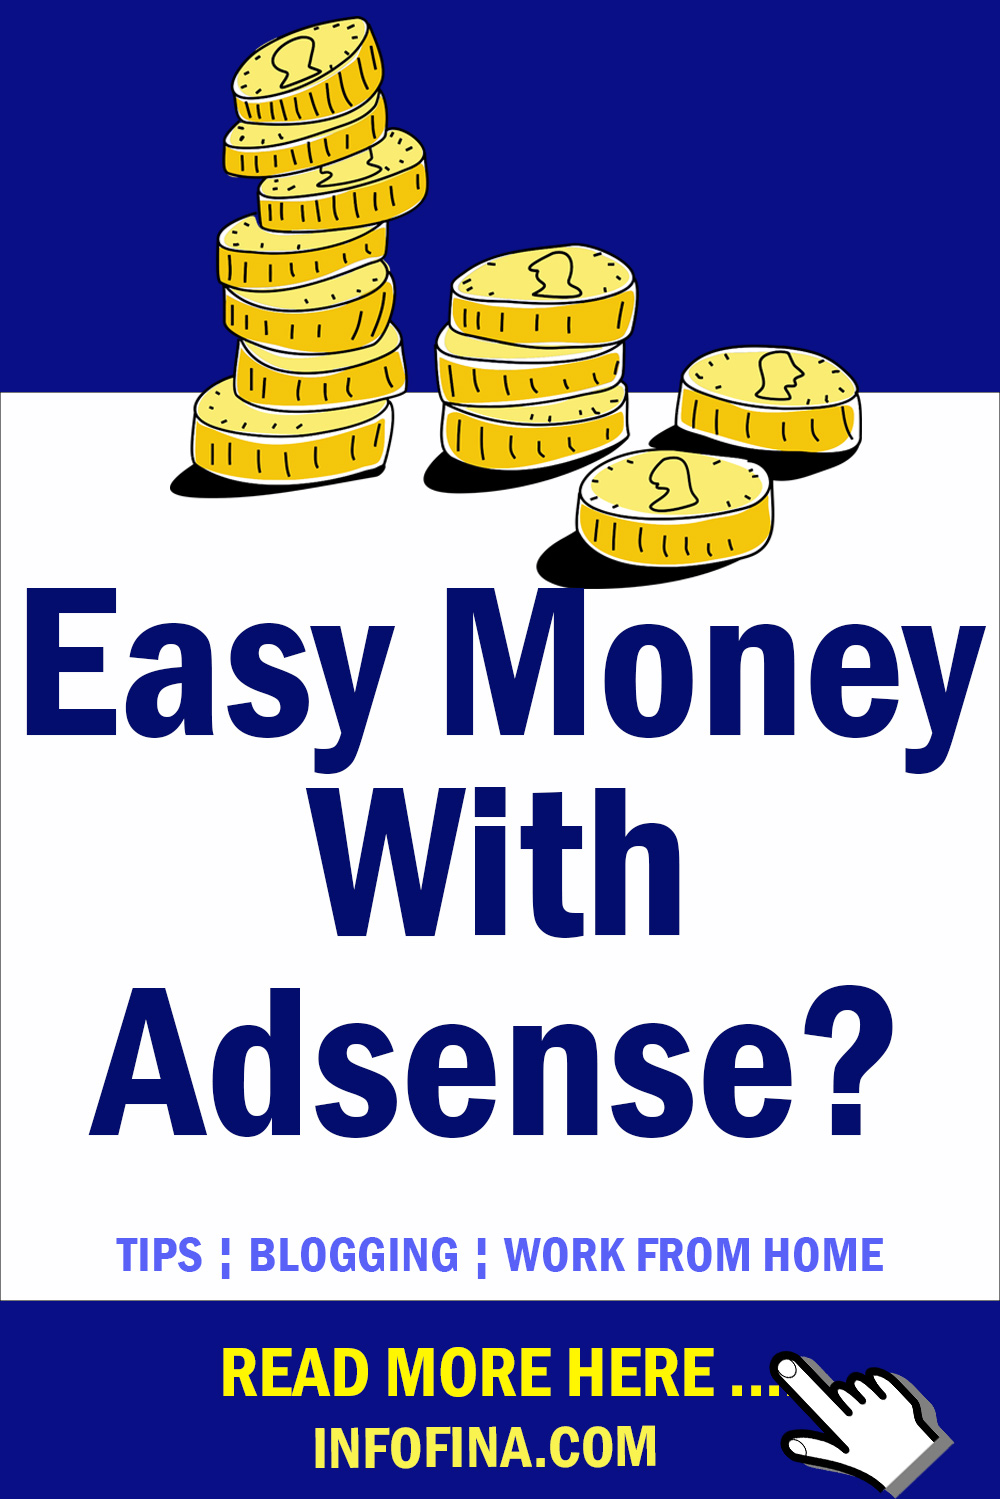 Easy-Money-With-Adsense / Canva